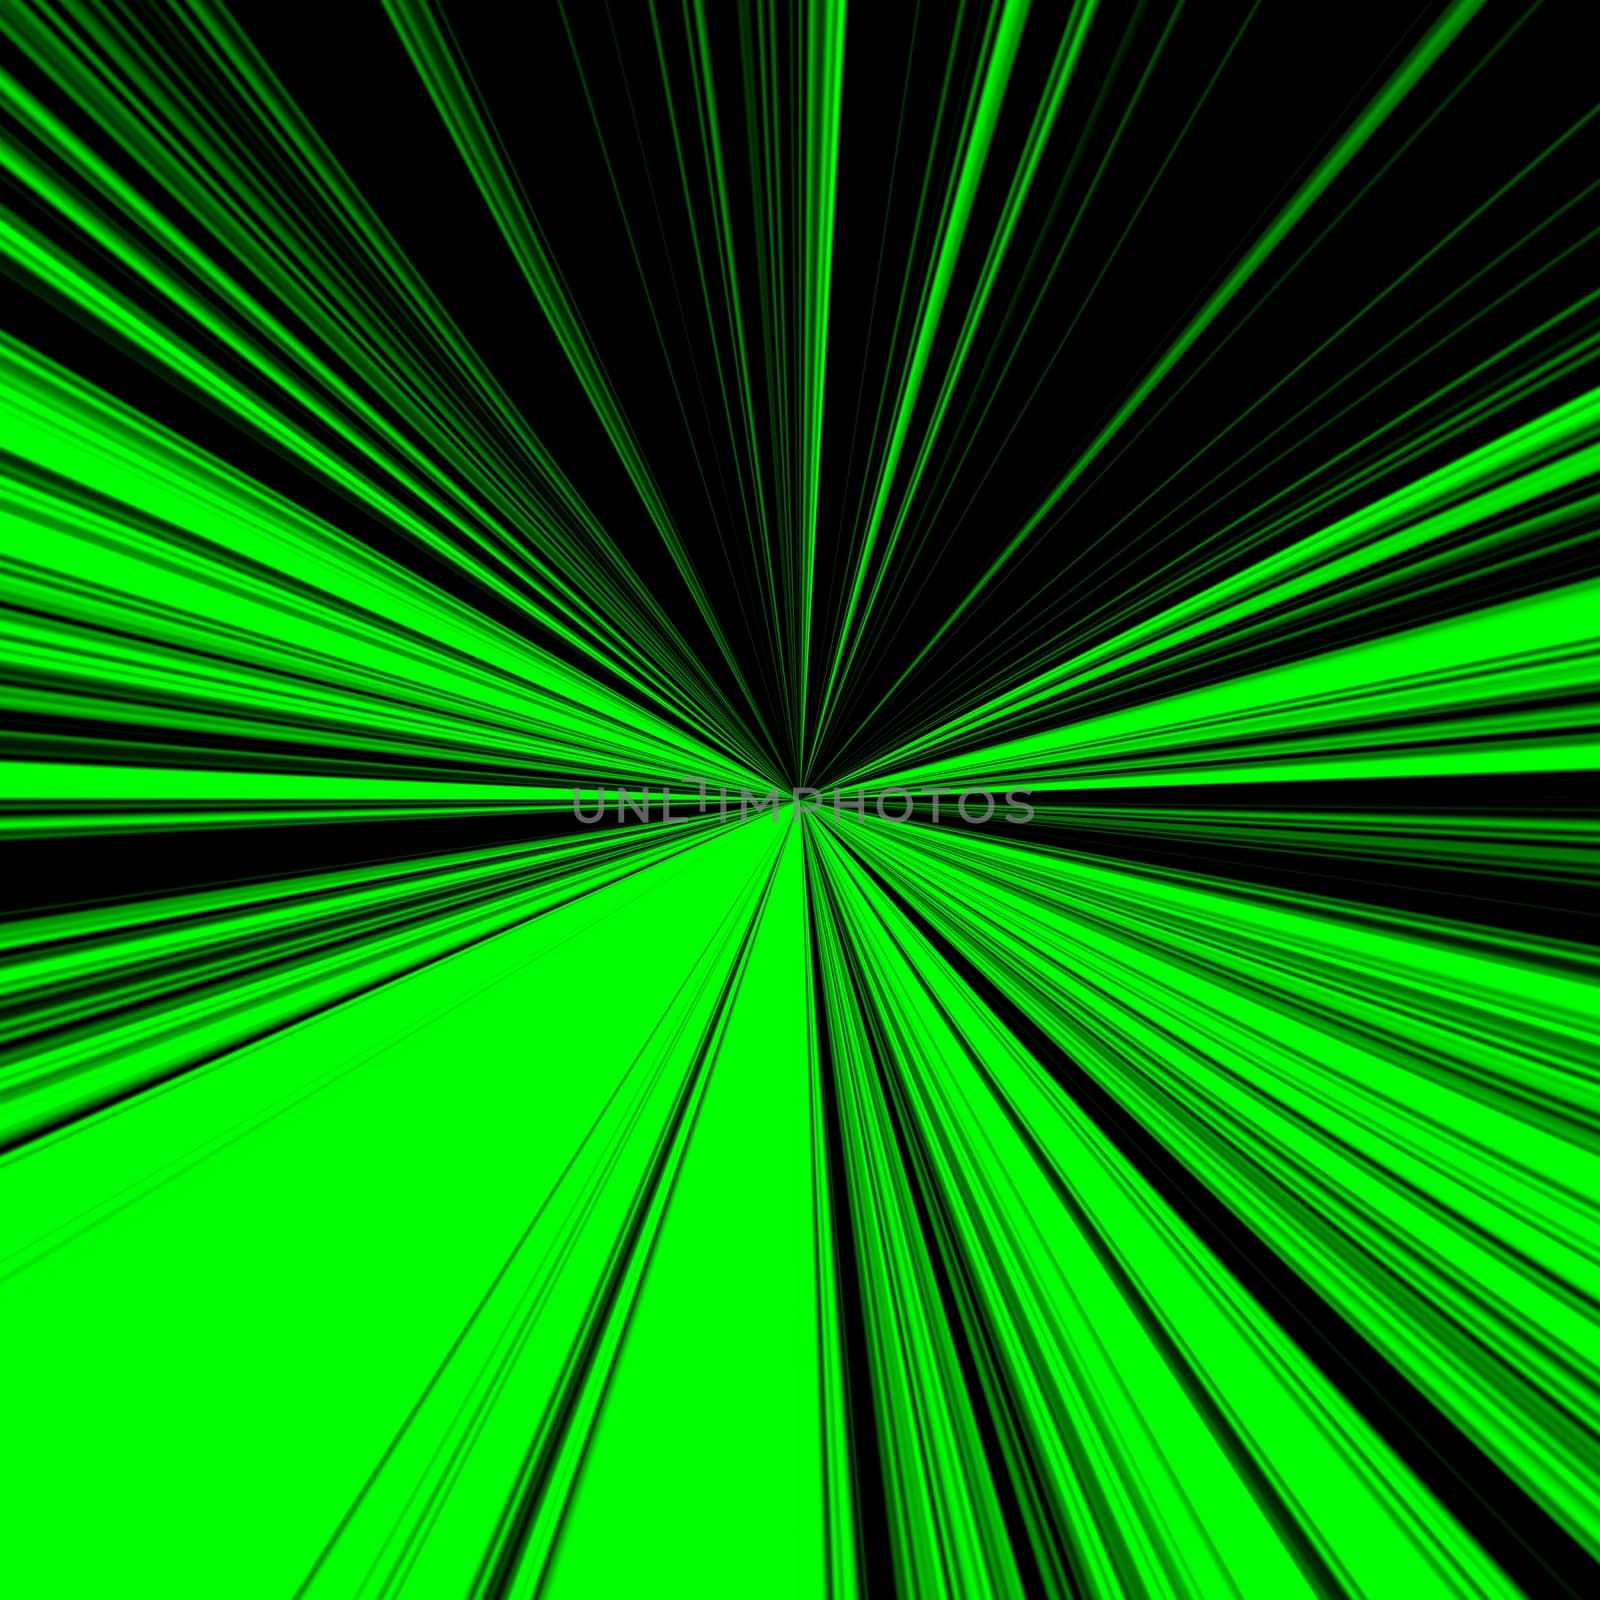 background of black green sunburst - digital high resolution by a3701027